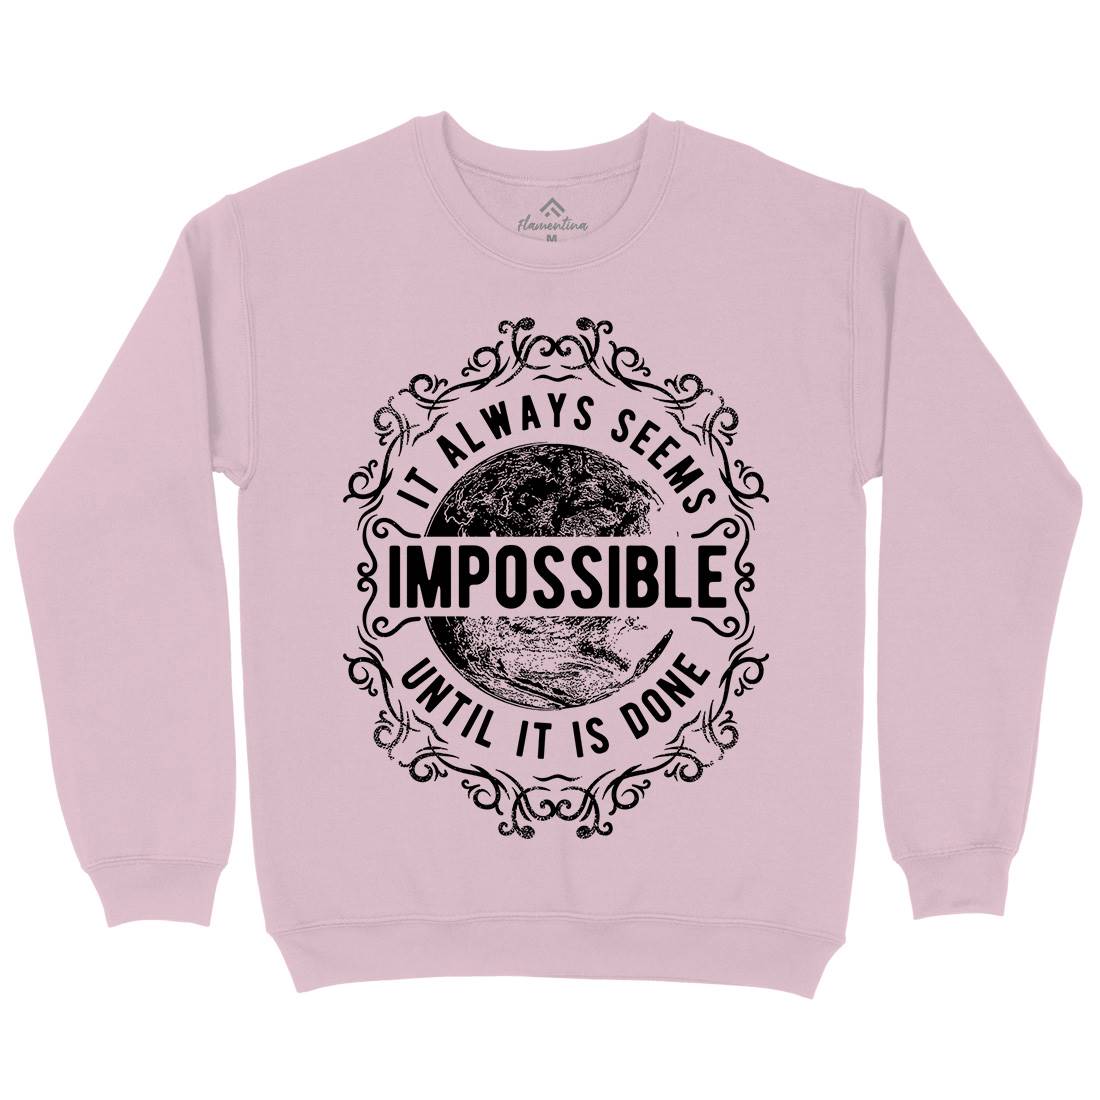 Always Seems Impossible Kids Crew Neck Sweatshirt Quotes C900